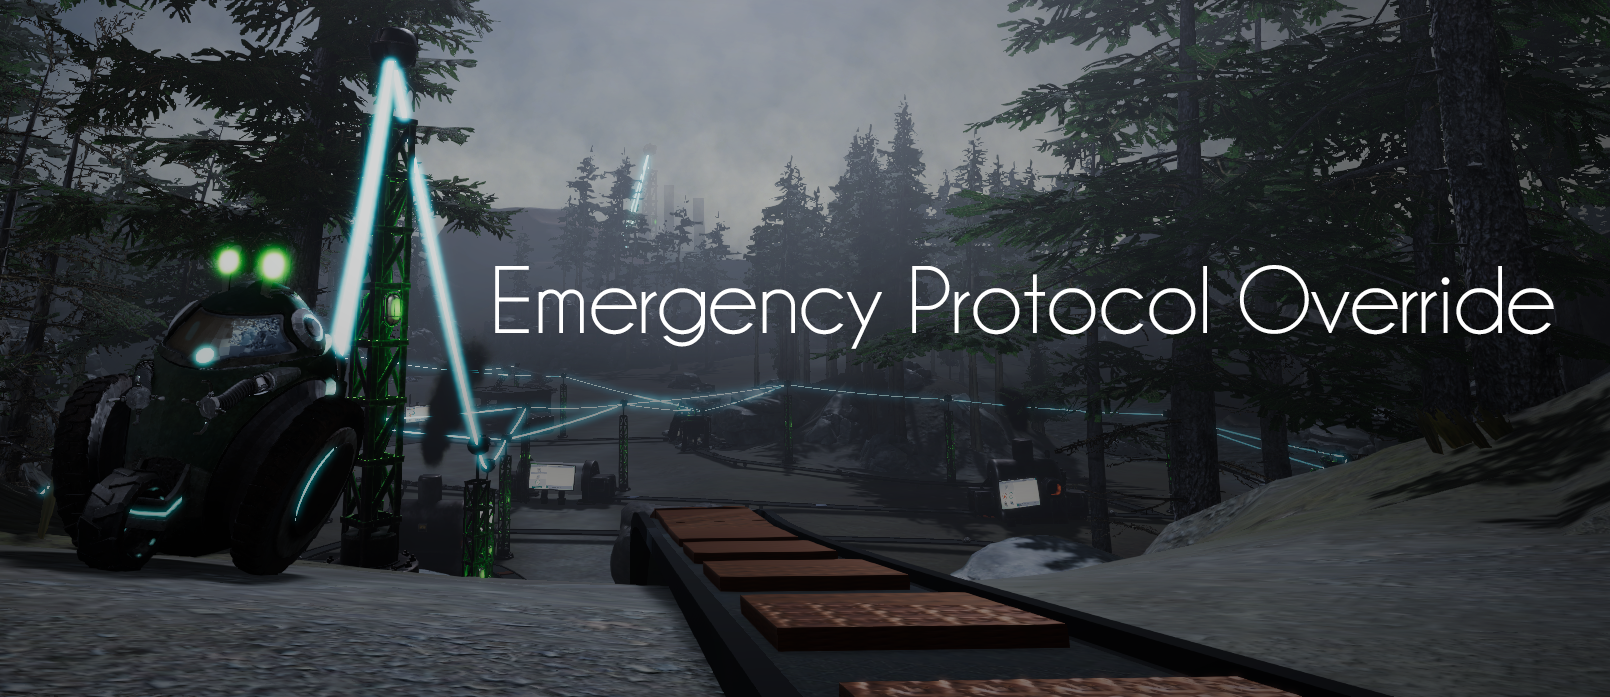 Emergency Protocol Override